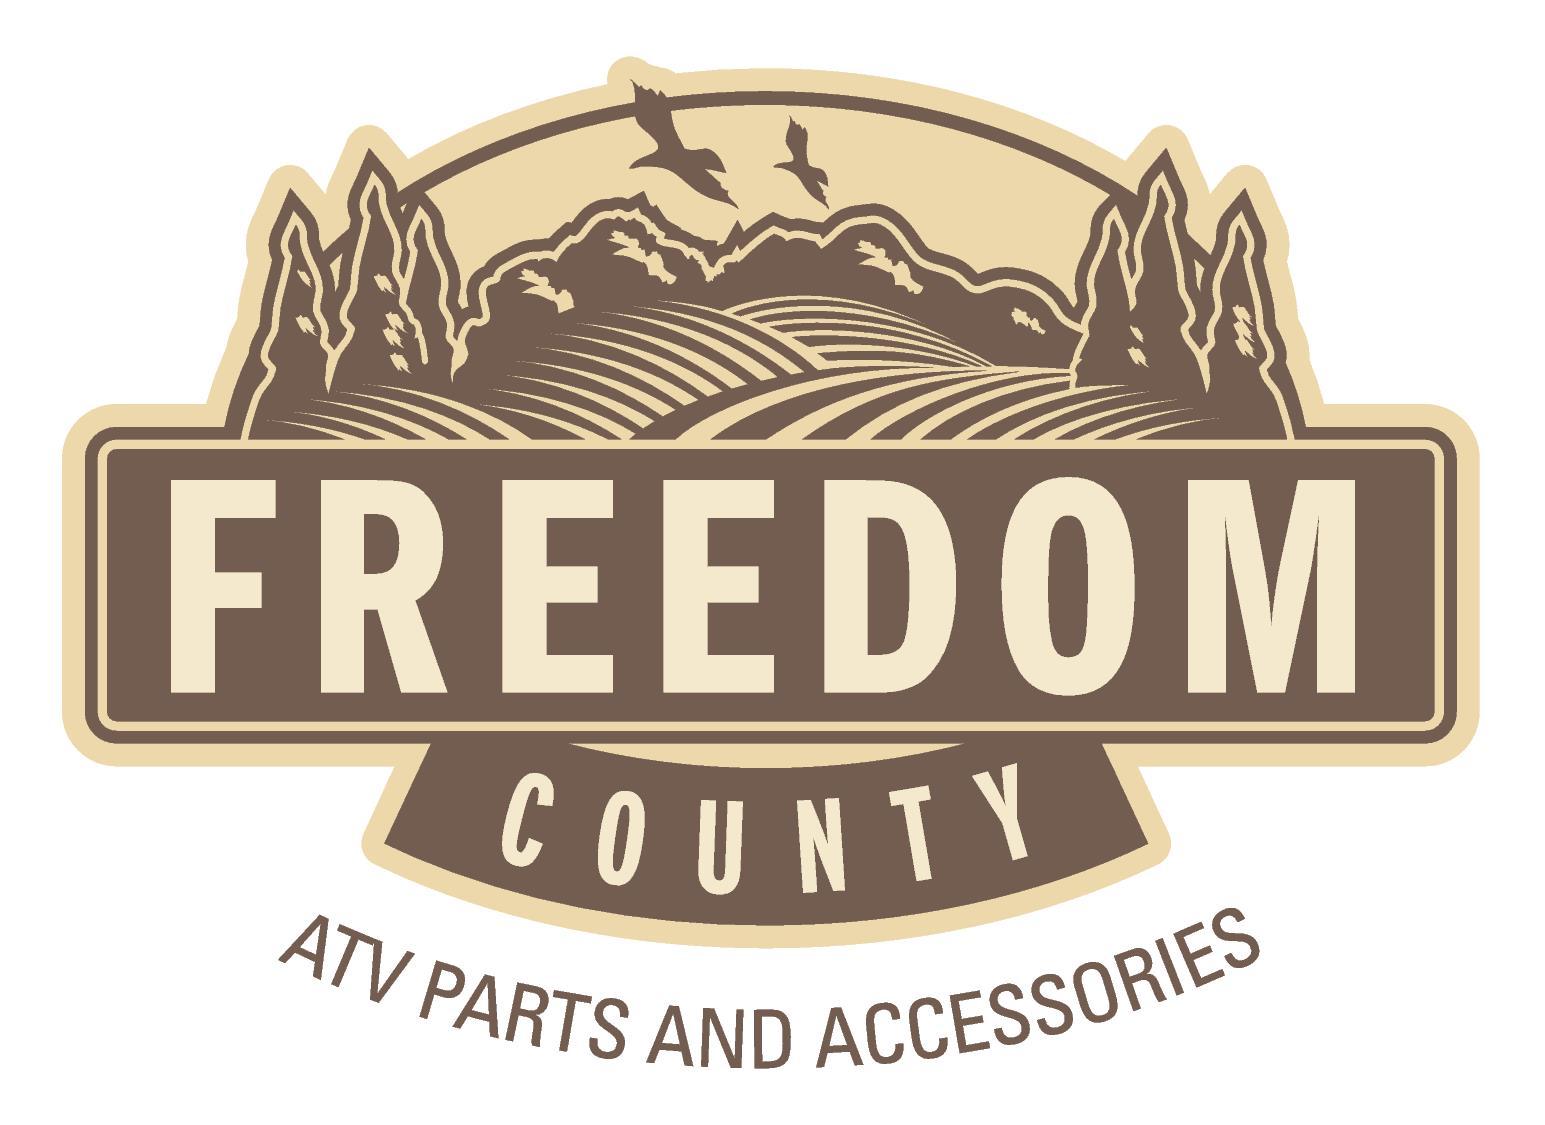 Wheel Spacer Freedom County ATV FC15615S 